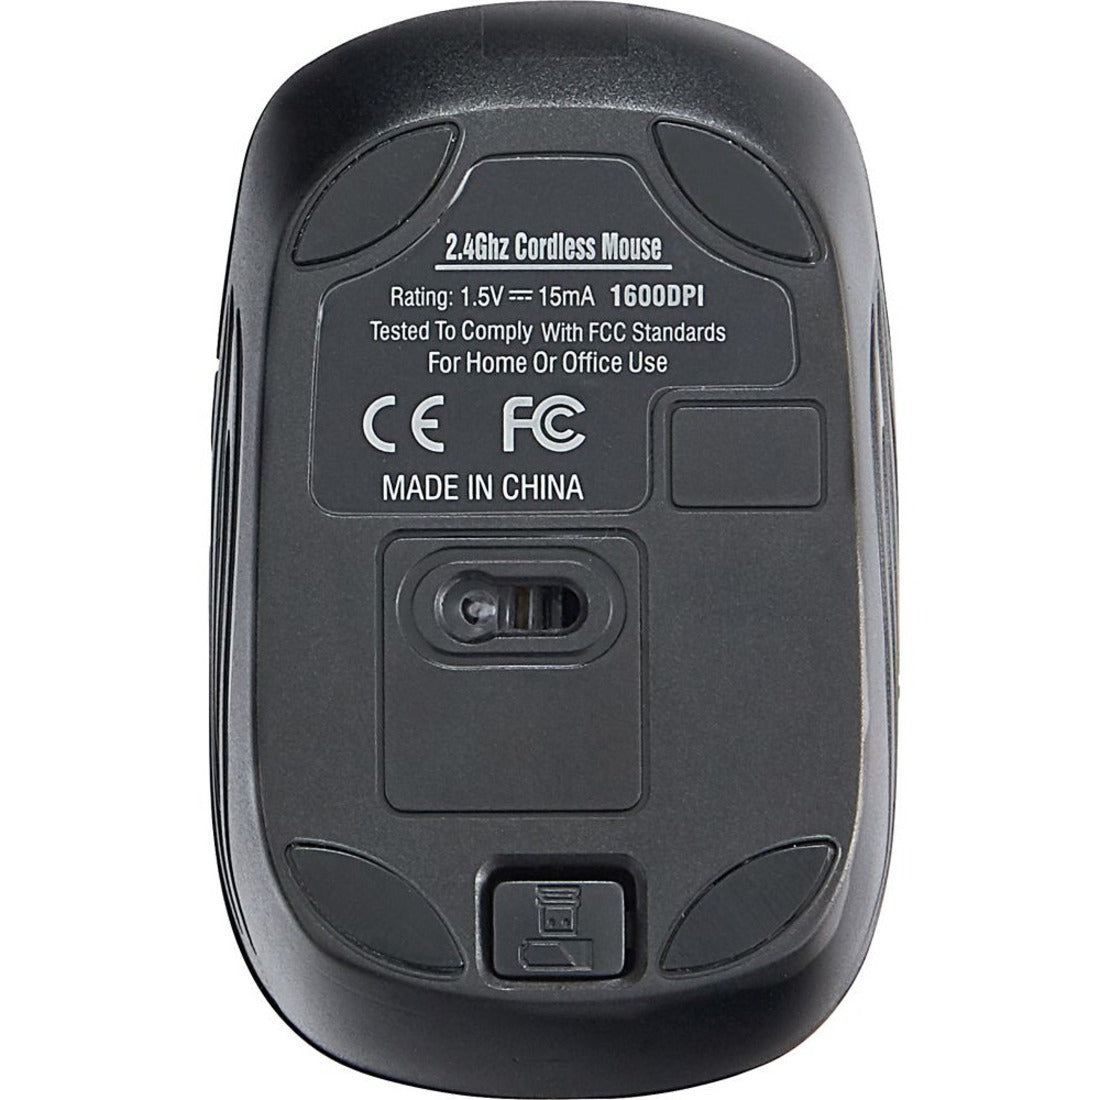 Verbatim 70705 Wireless Mini Travel Mouse, Commuter Series - Blue, 1000 DPI, 2.4 GHz Wireless Technology